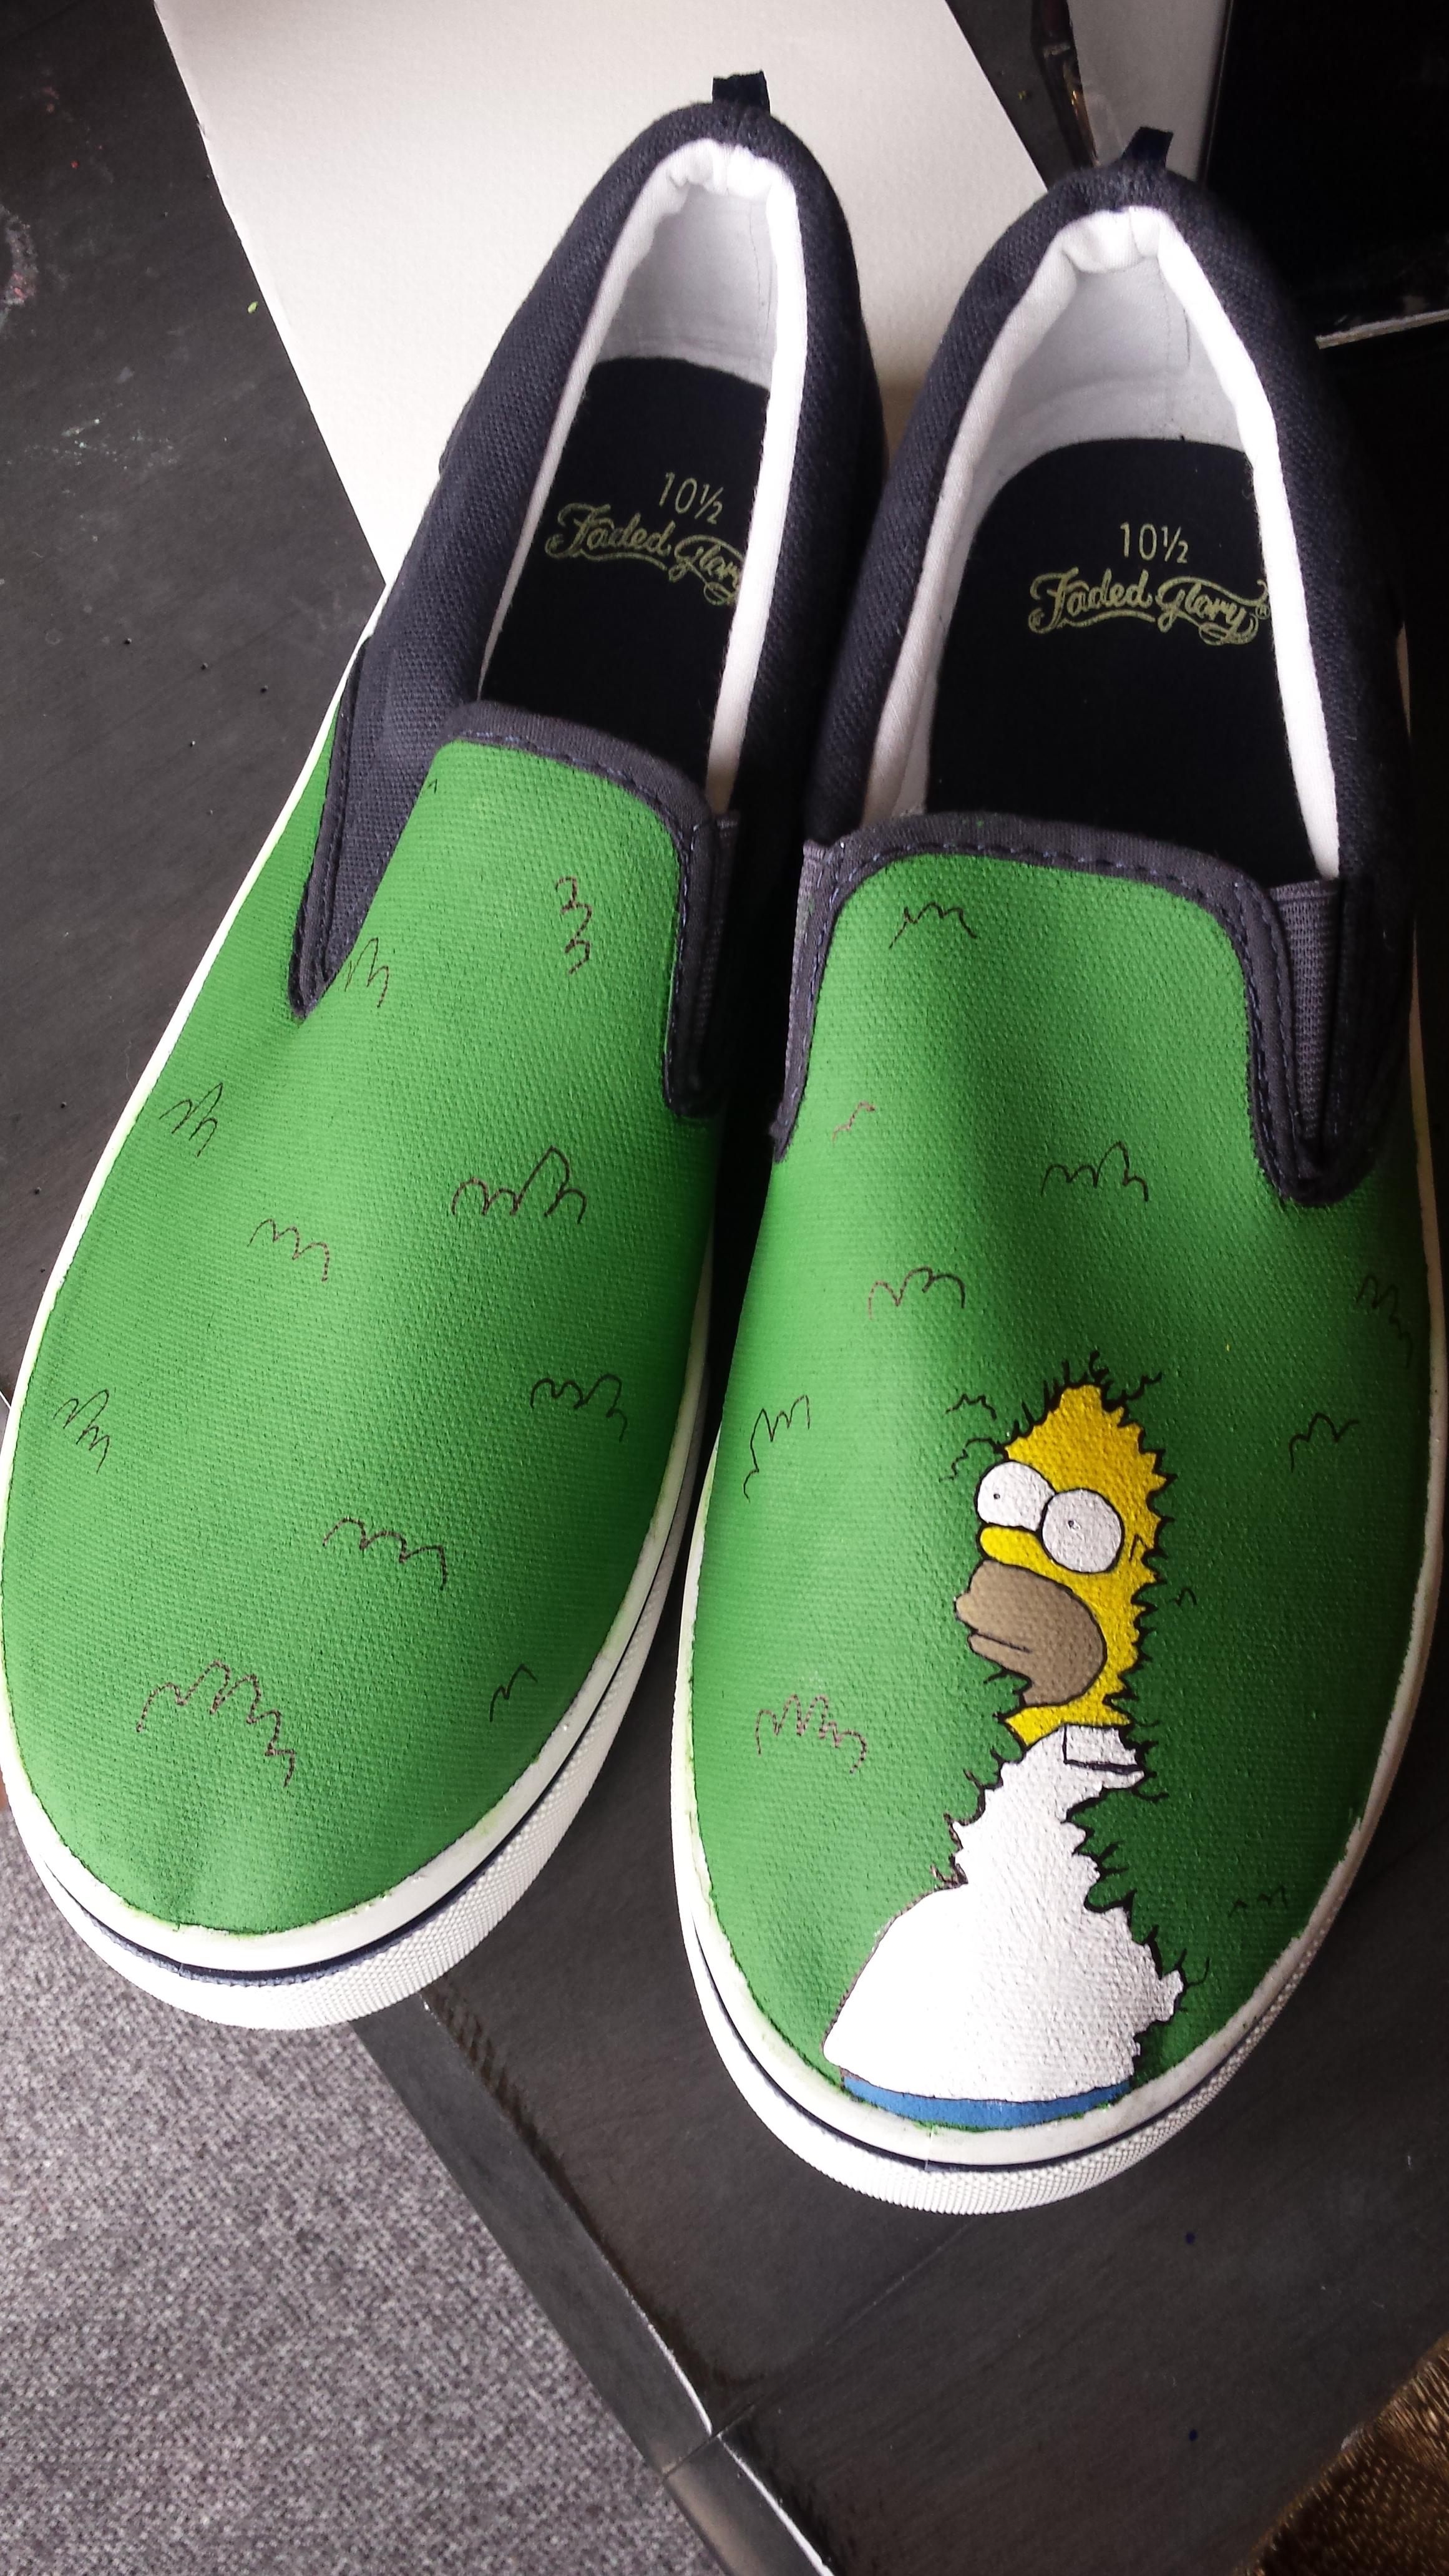 Simpsons shoes